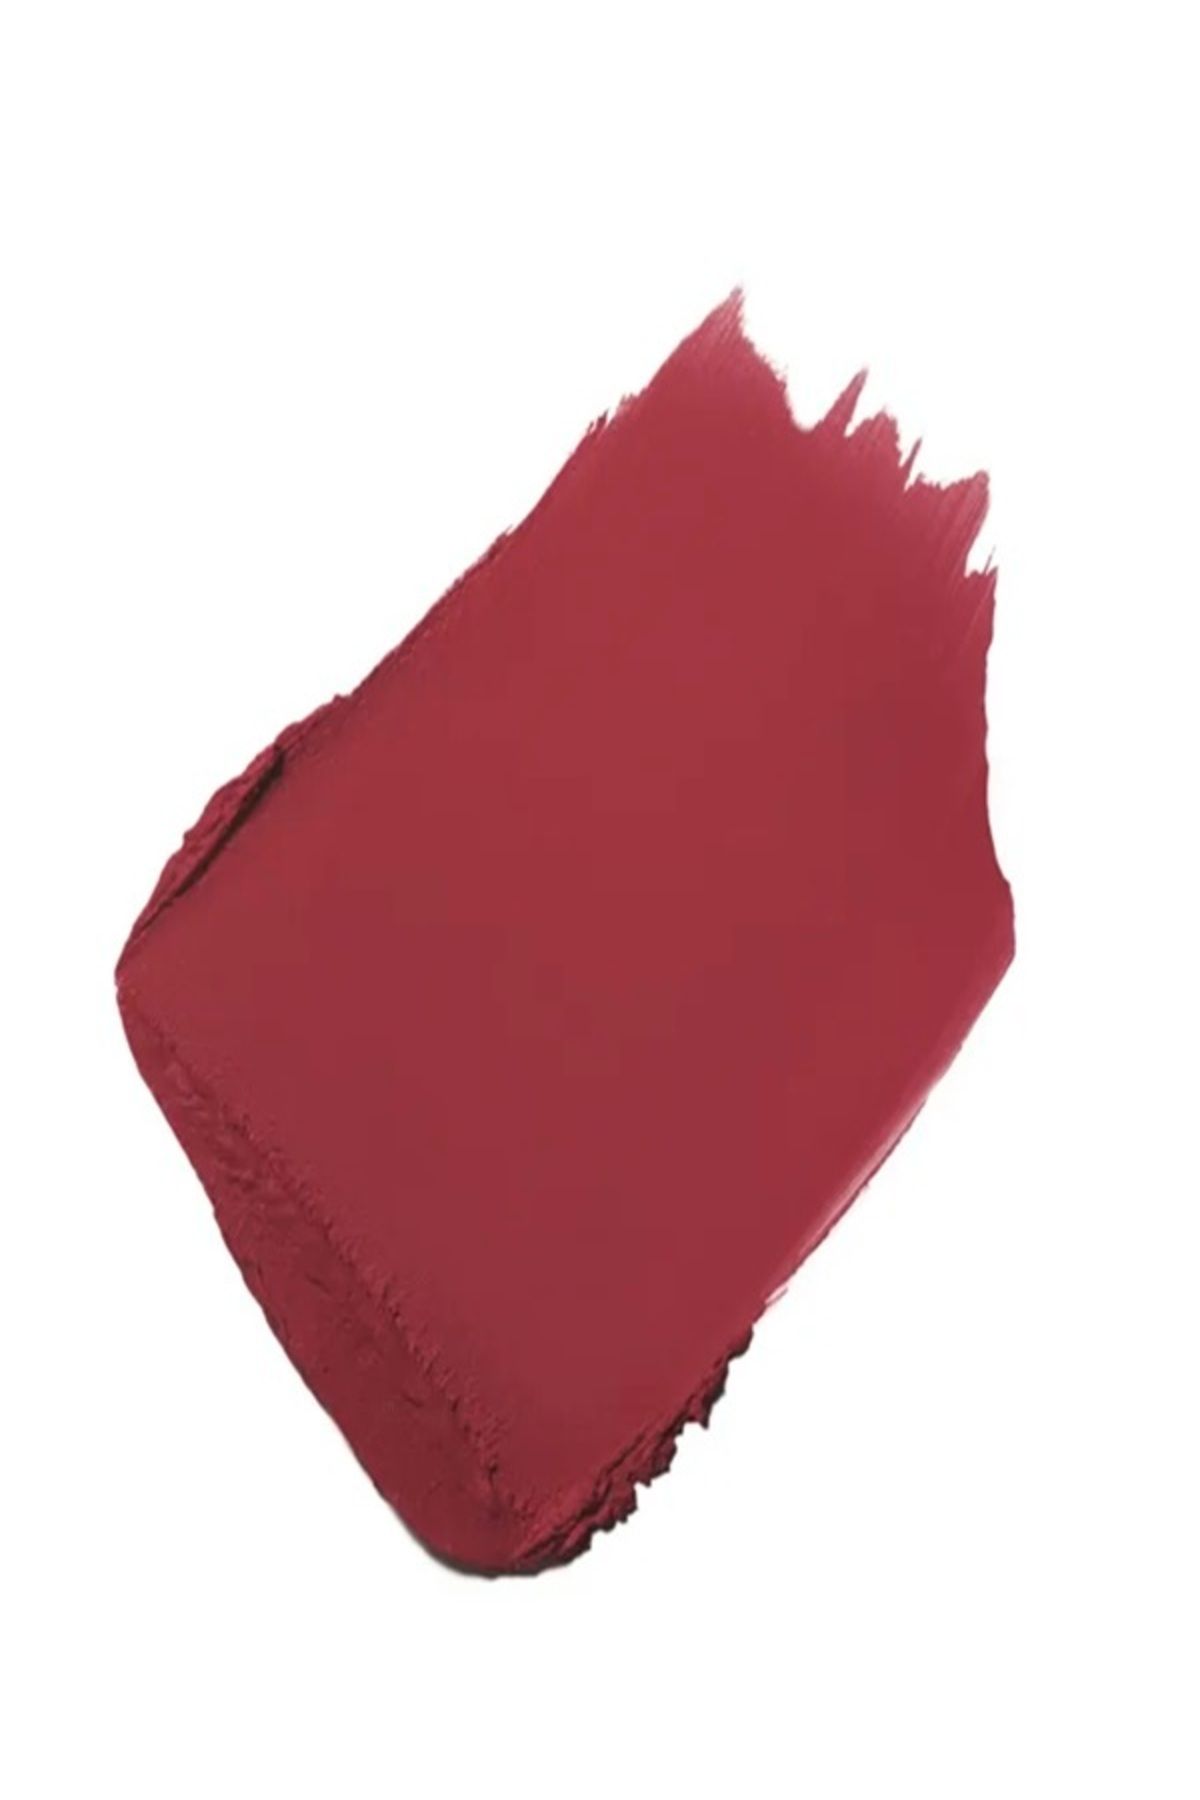 Chanel رژ لب مات درخشان ALLURE VELVET با رنگدانه ماندگاری طولانی رنگ قرمز آلبالویی